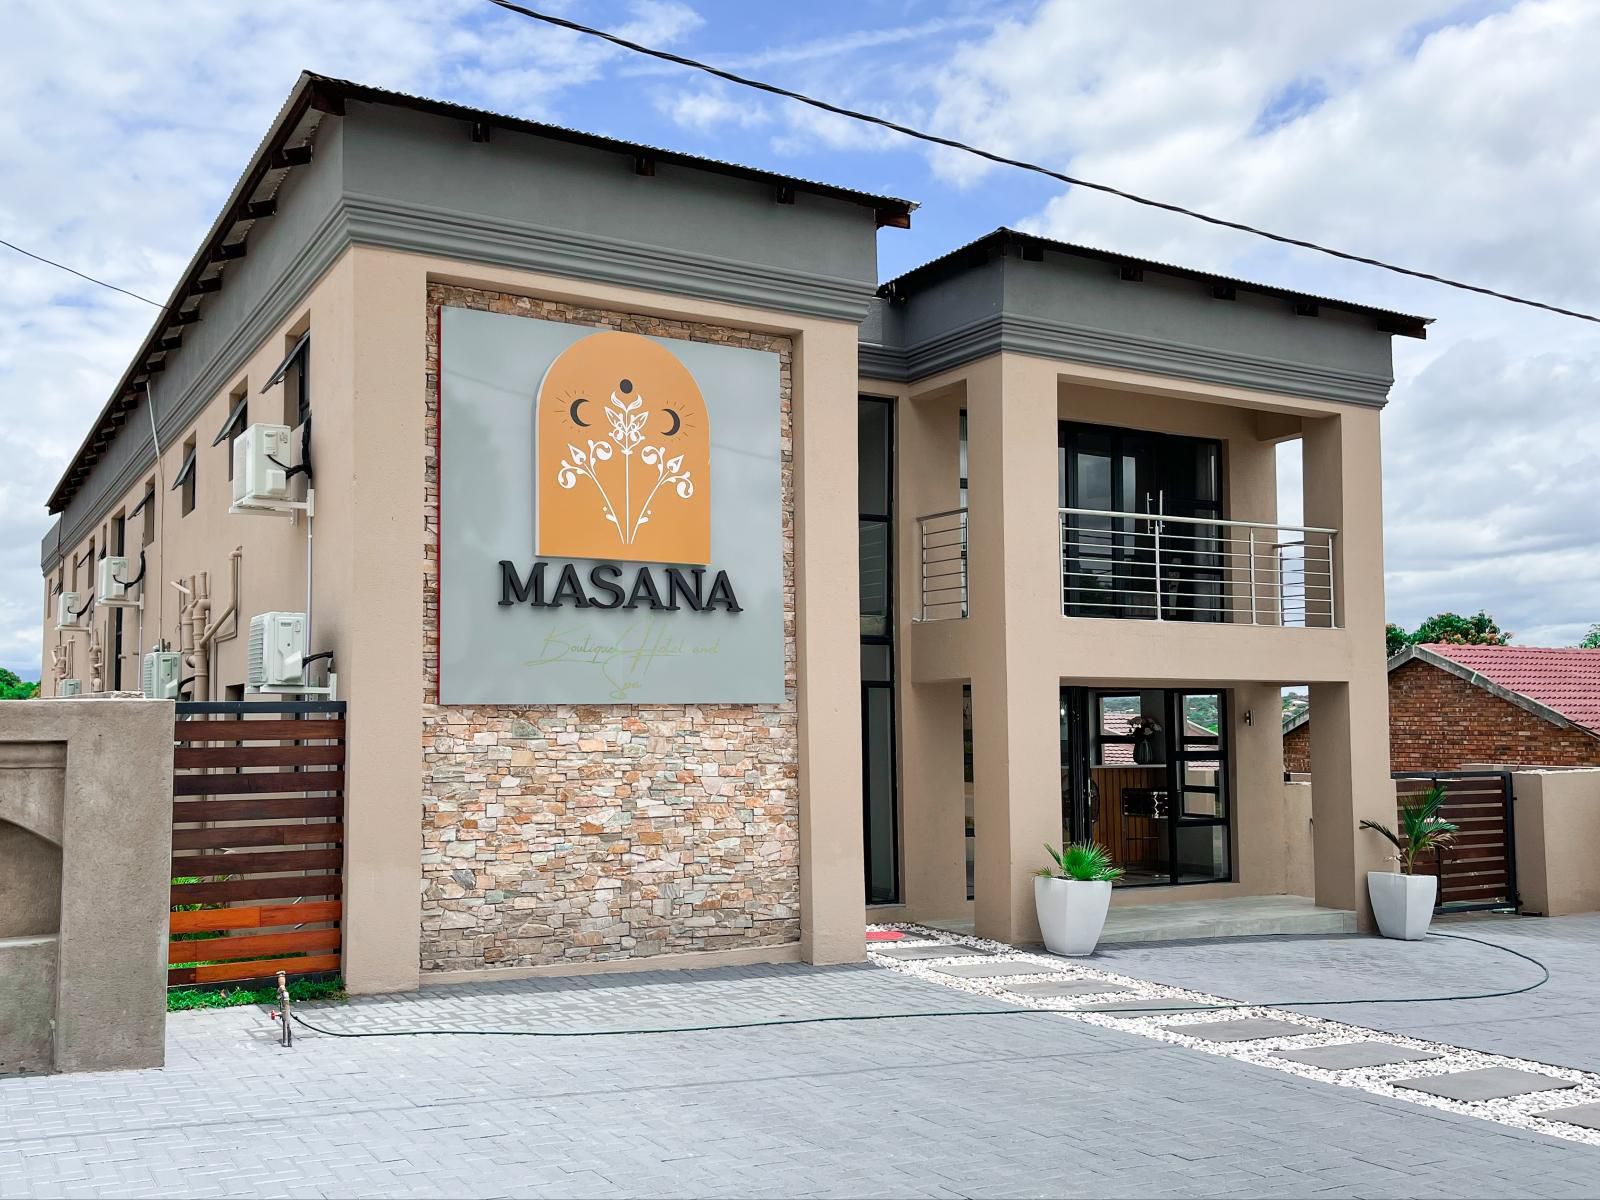 Masana Boutique Hotel And Spa Thulamahashe Mpumalanga South Africa House, Building, Architecture, Volcano, Nature, Mountain